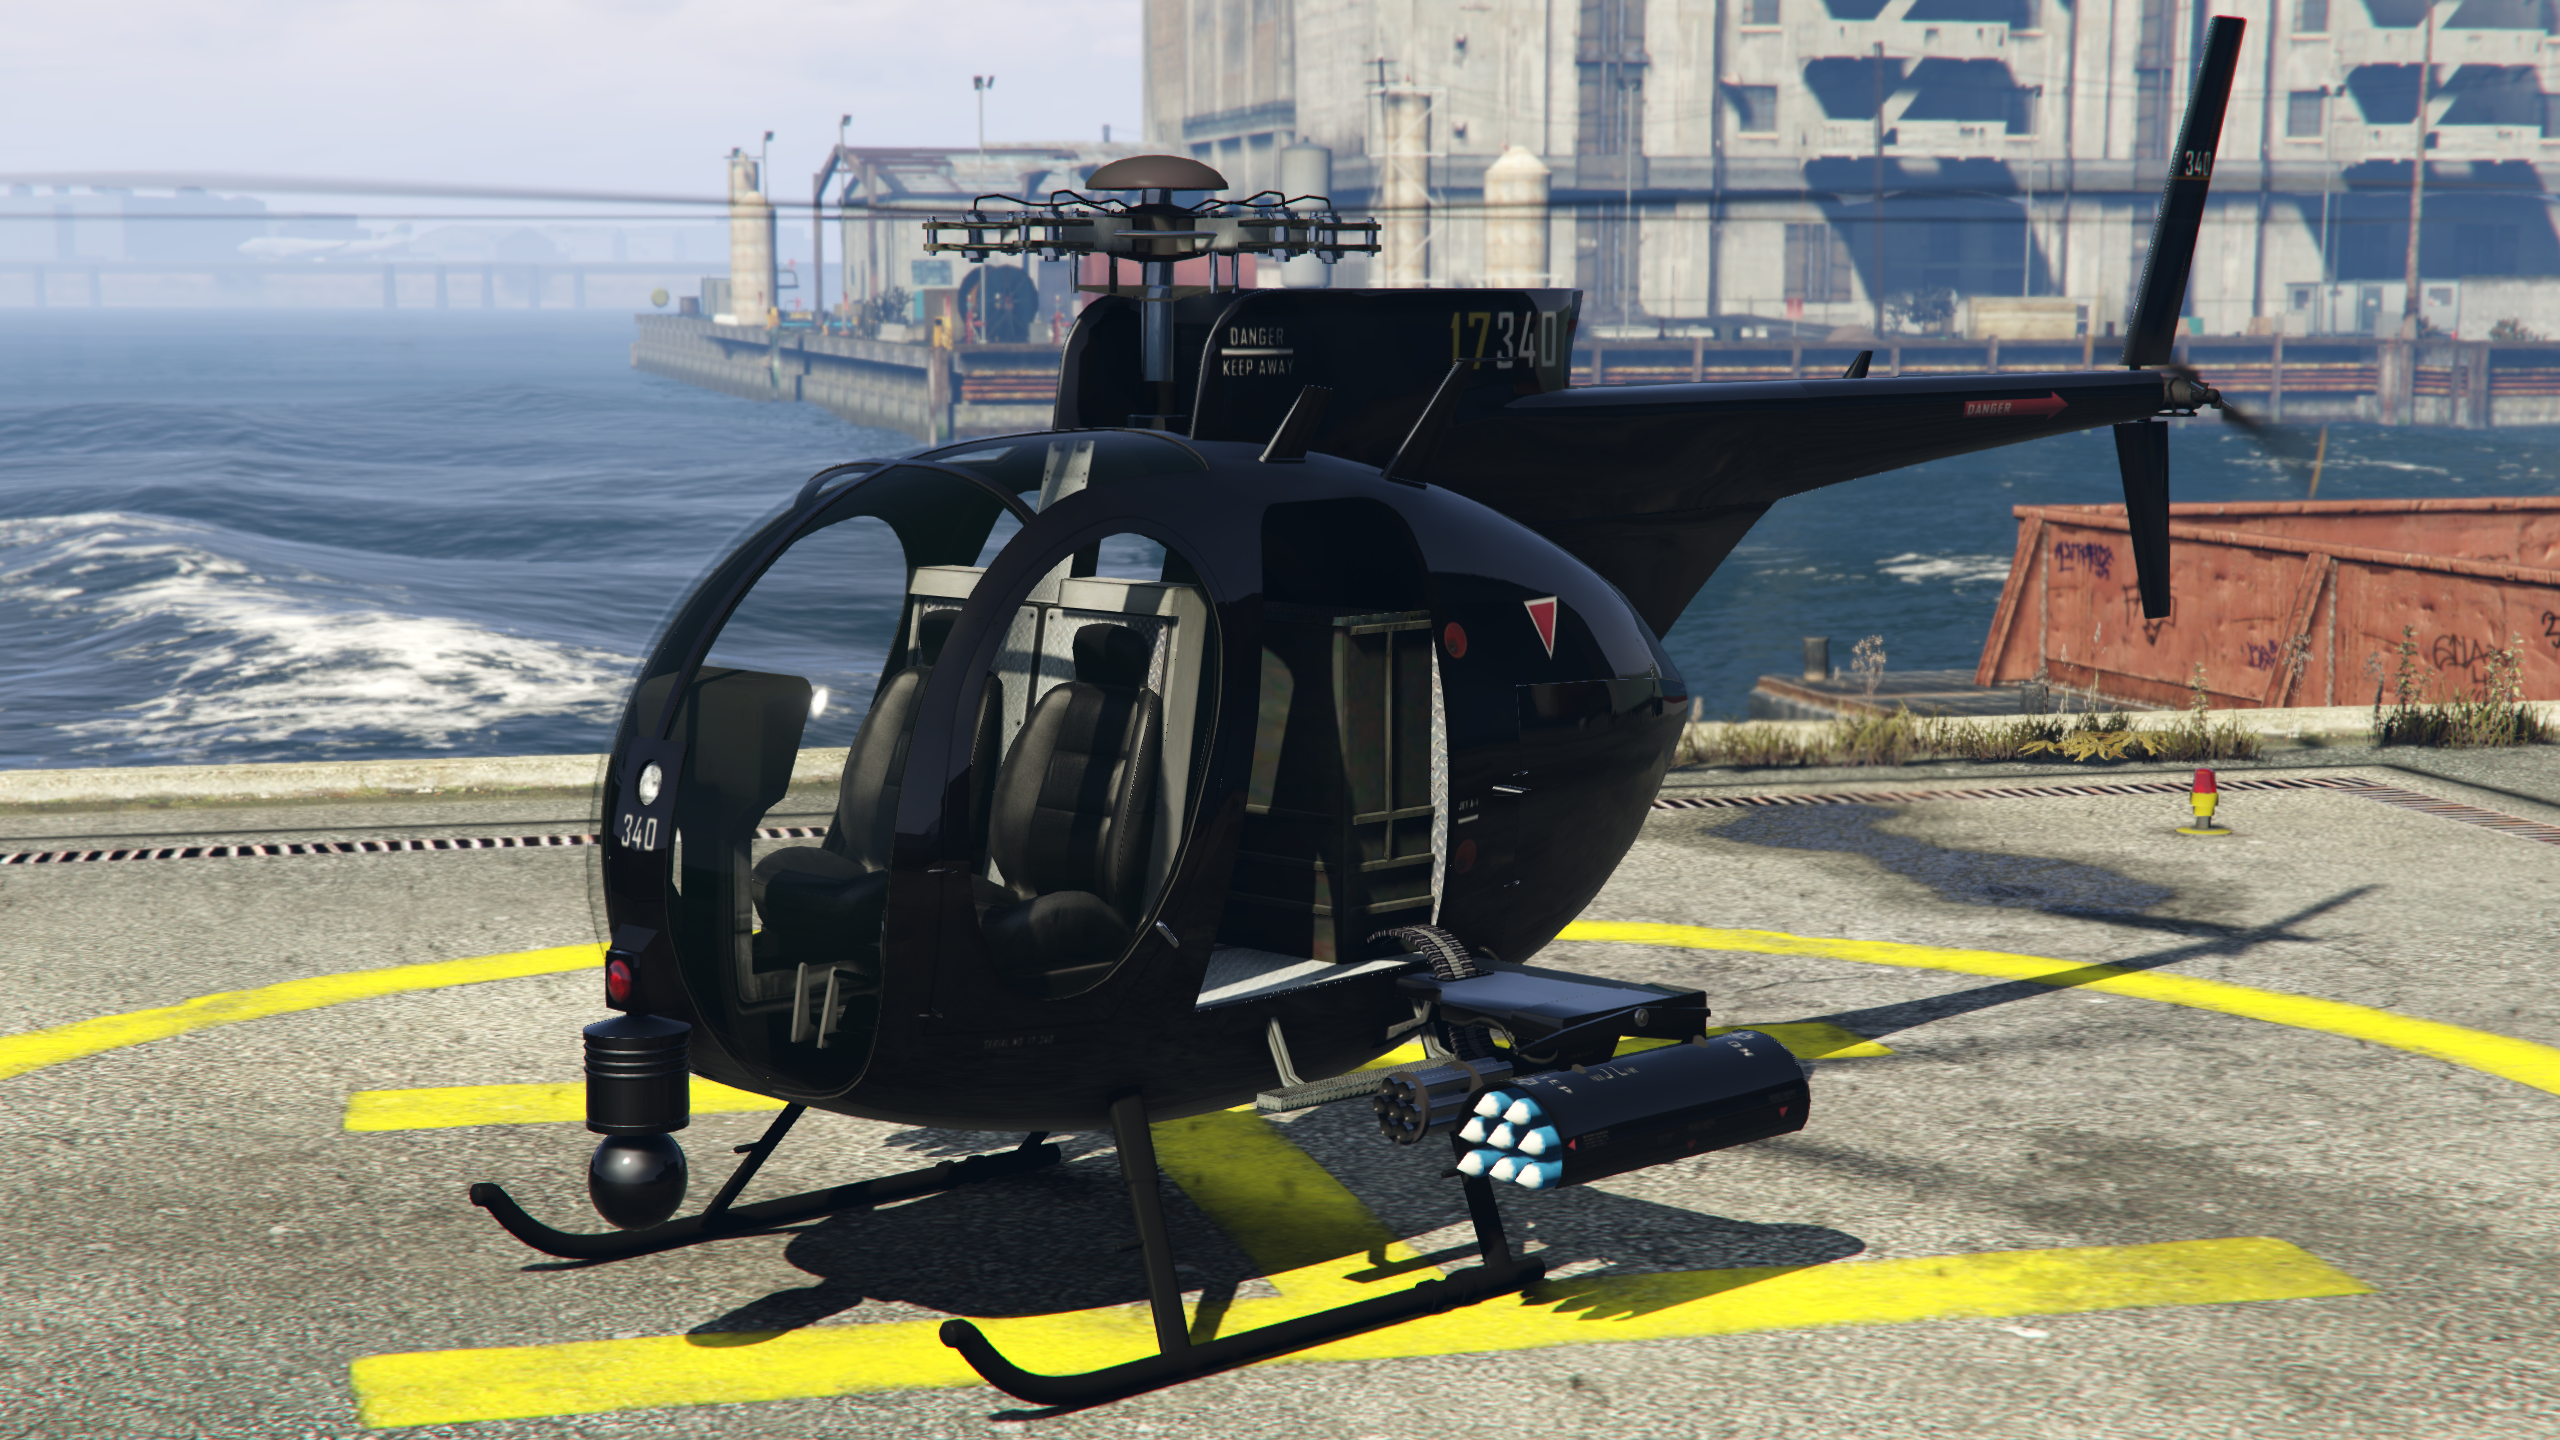 GTA 5 codigo do helicoptero / manha do helicoptero (helicoptero